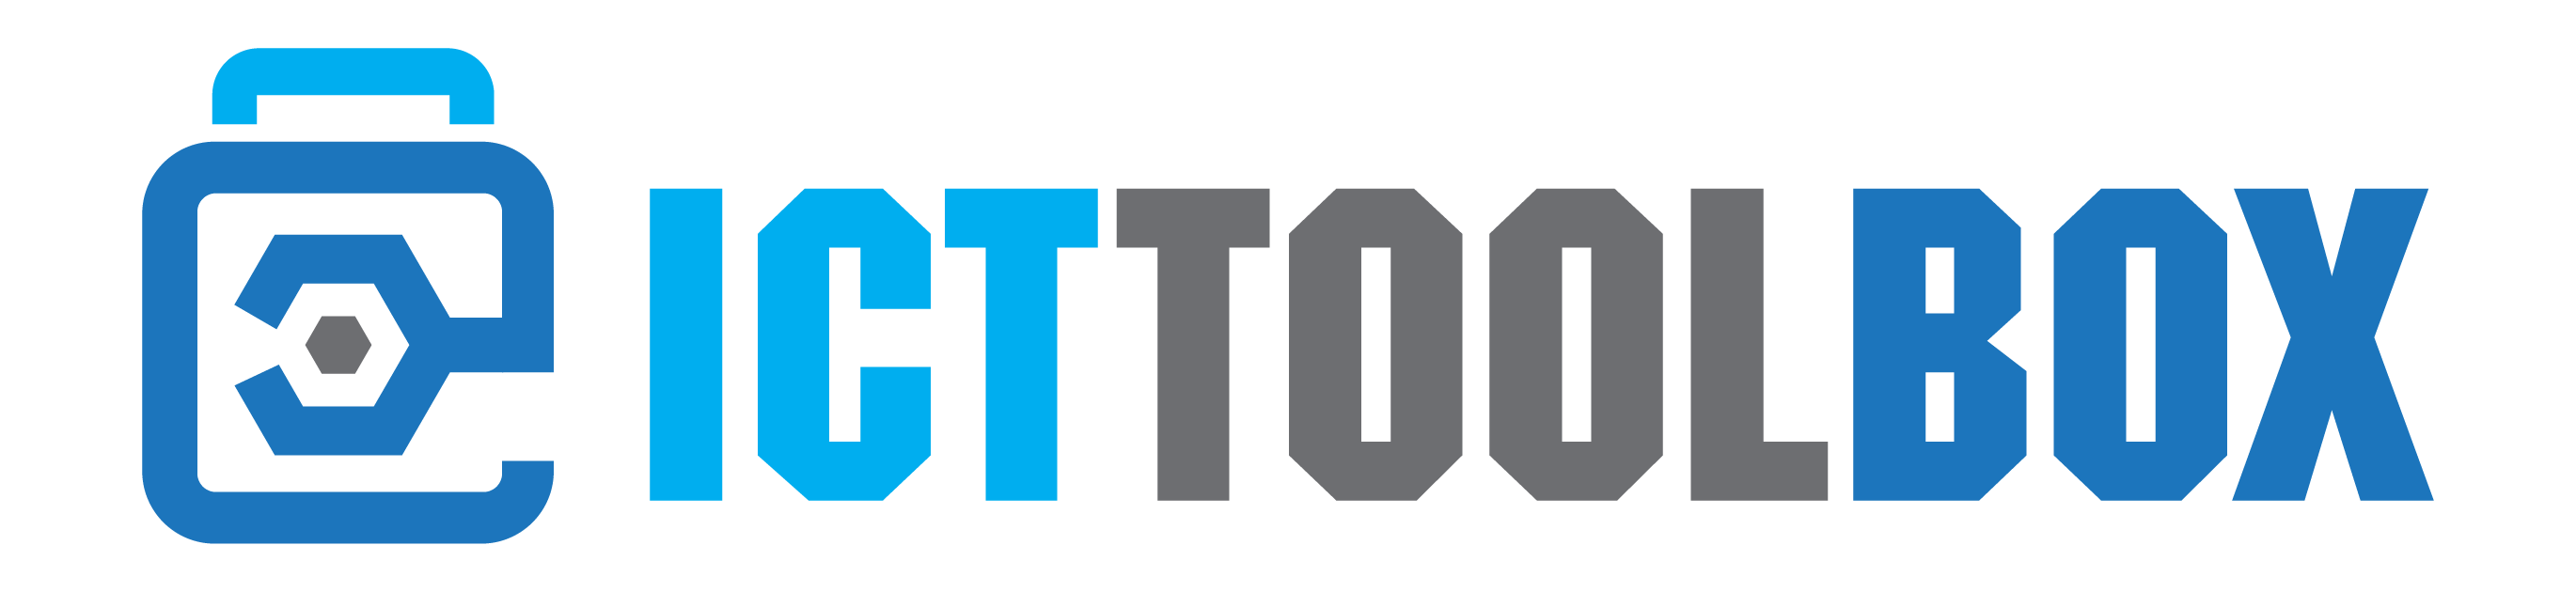 ICT ToolBox